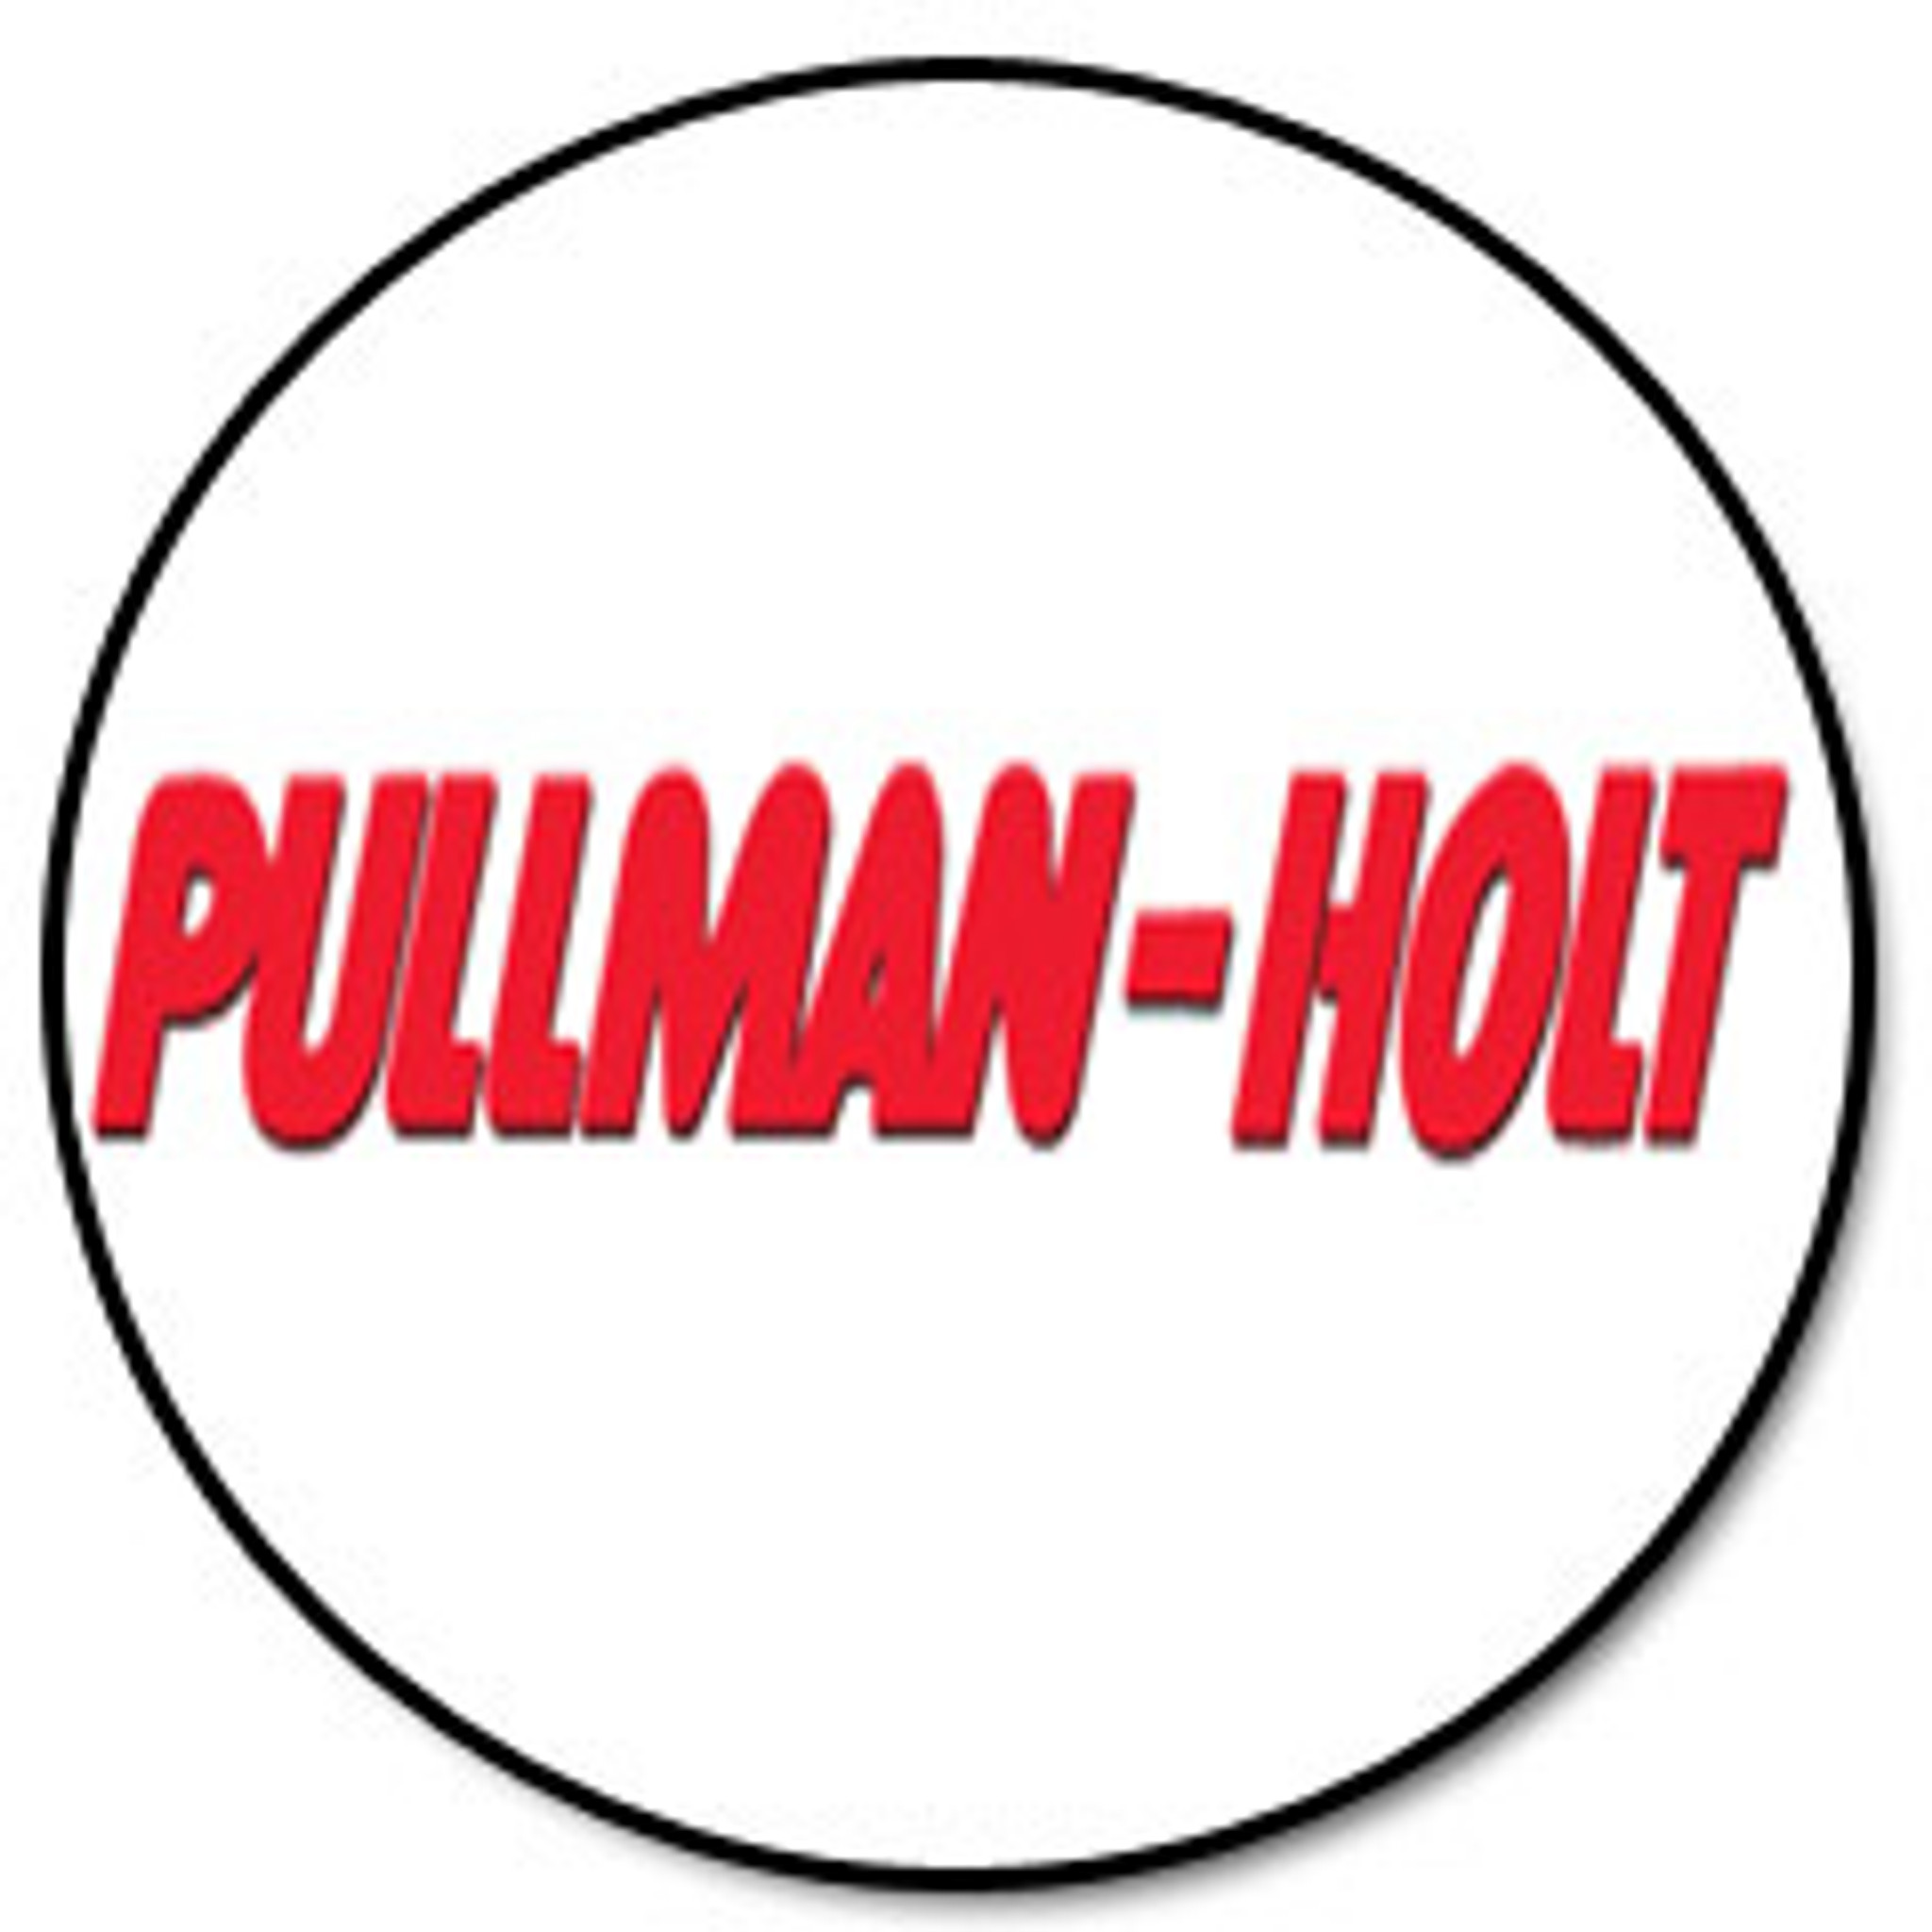 Pullman Holt